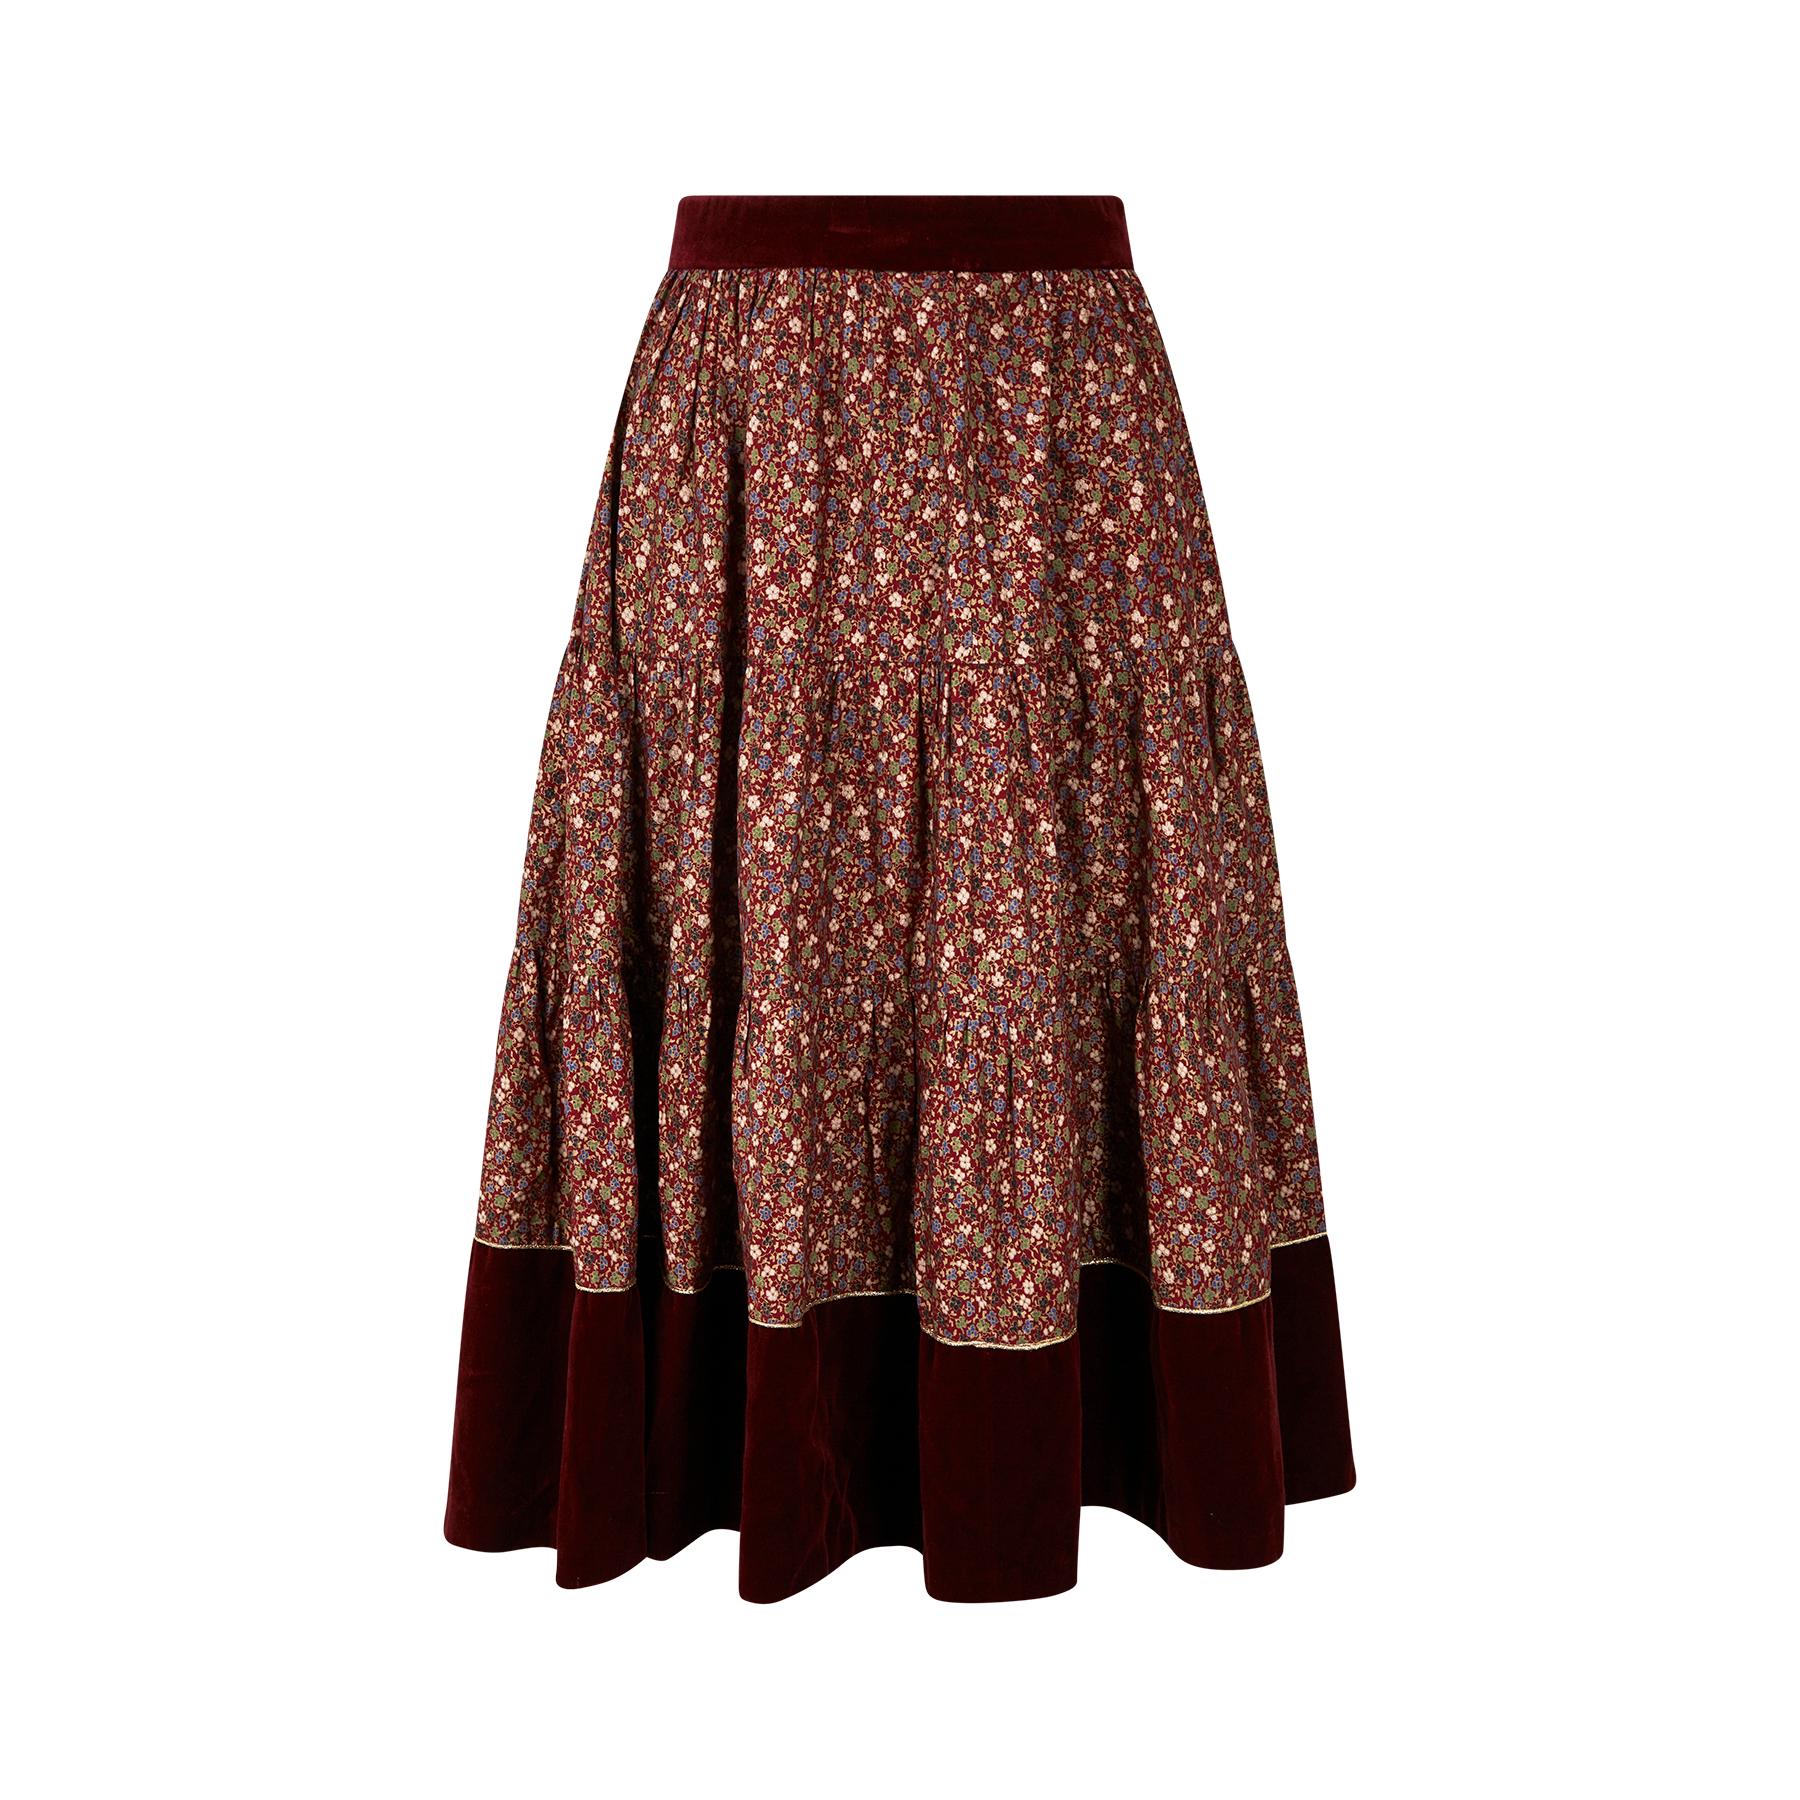 1970s Marion Donaldson Liberty Print Red Floral Cotton & Velvet Skirt For Sale